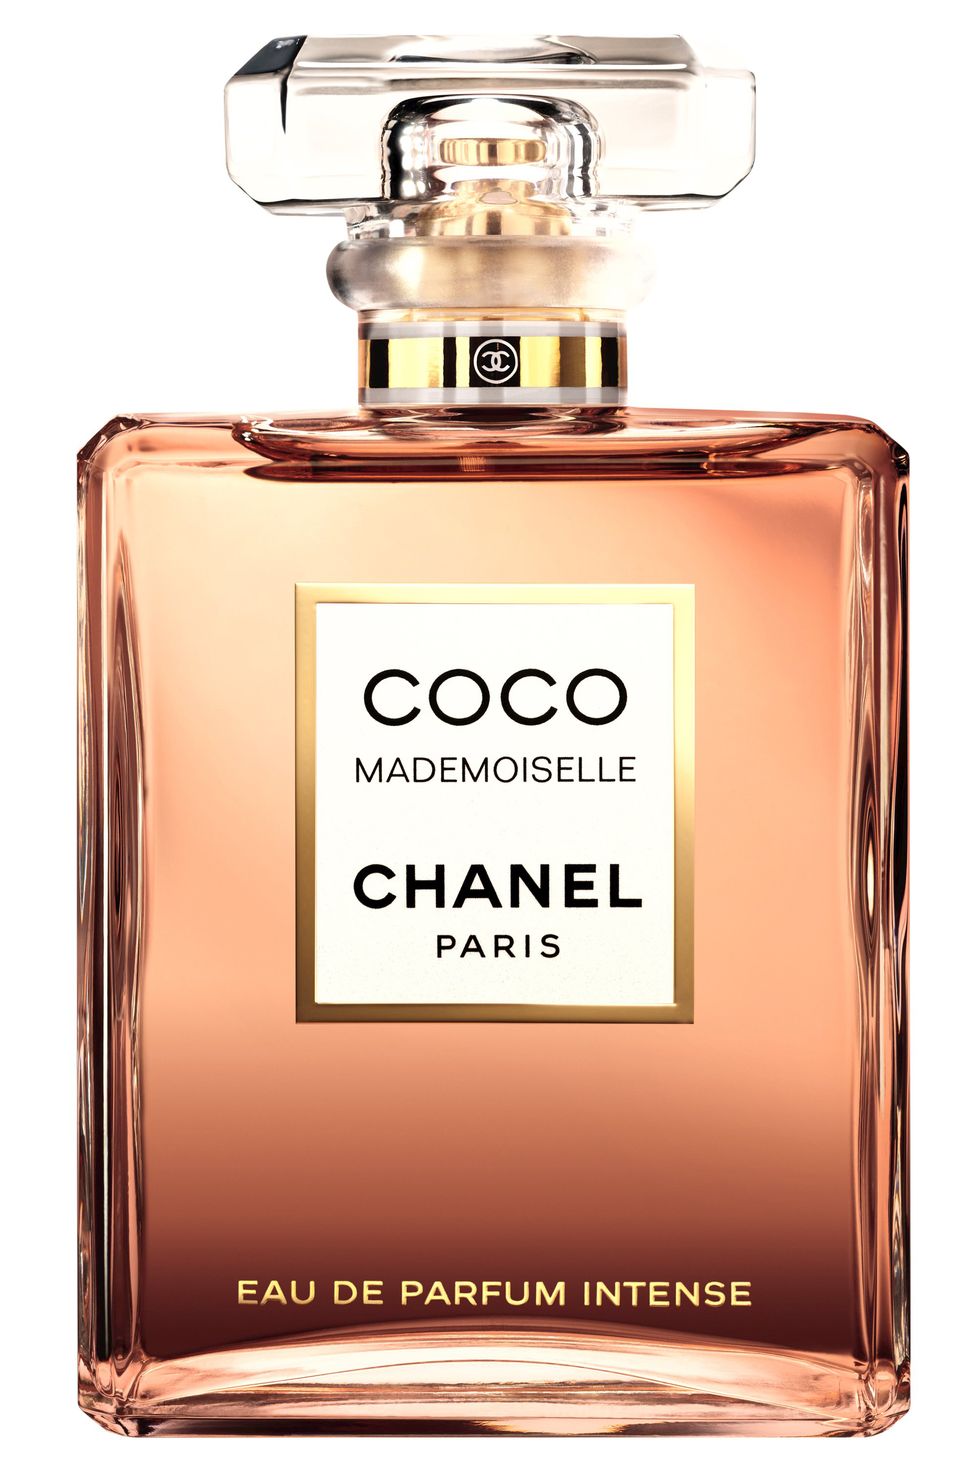 Chanel Coco Mademoiselle perfume alternative for women